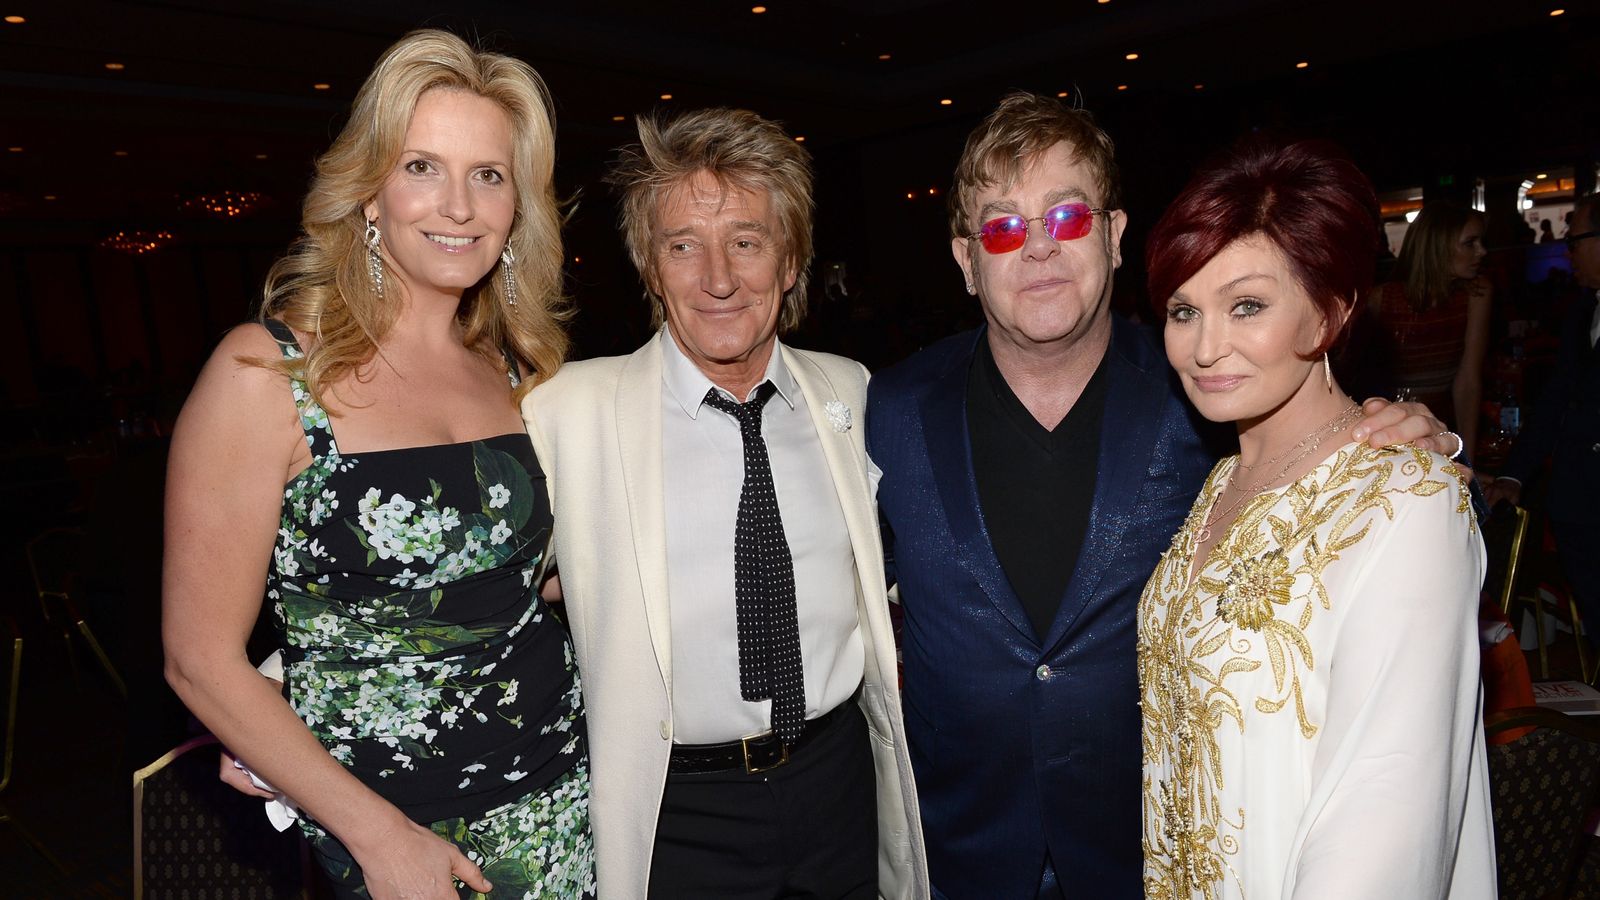 Rod Stewart: Elton John's tour 'stinks of selling tickets' | Ents & Arts News | Sky News